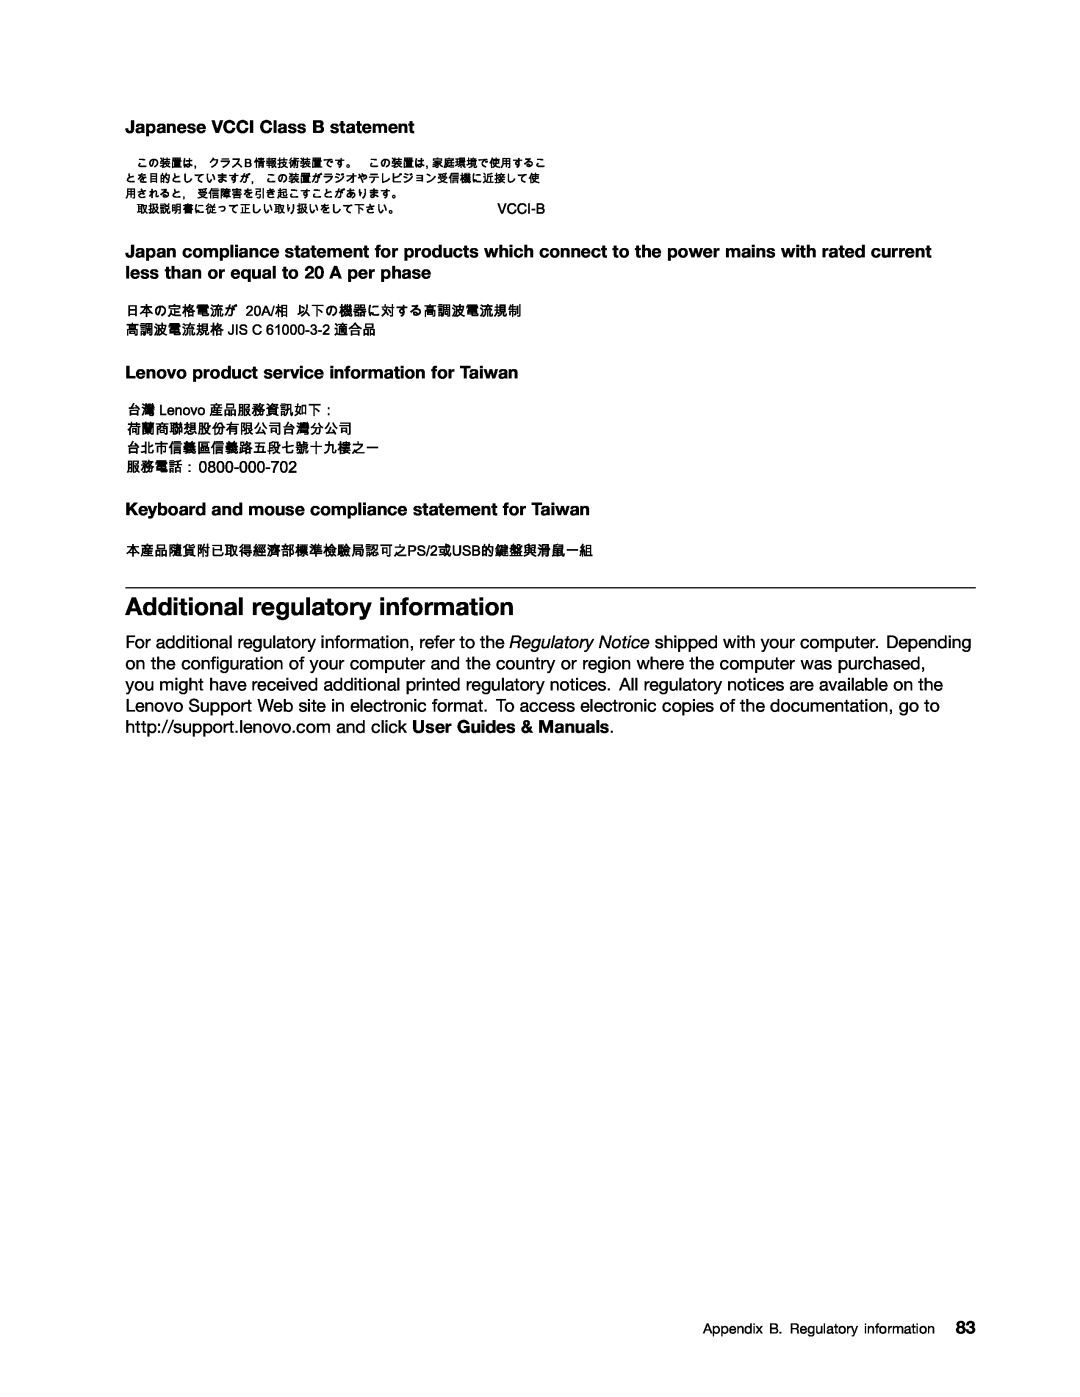 Lenovo 3419, 3398, 3397, 3399, 3414, 3396, 3416, 3426, 3415 Additional regulatory information, Japanese VCCI Class B statement 